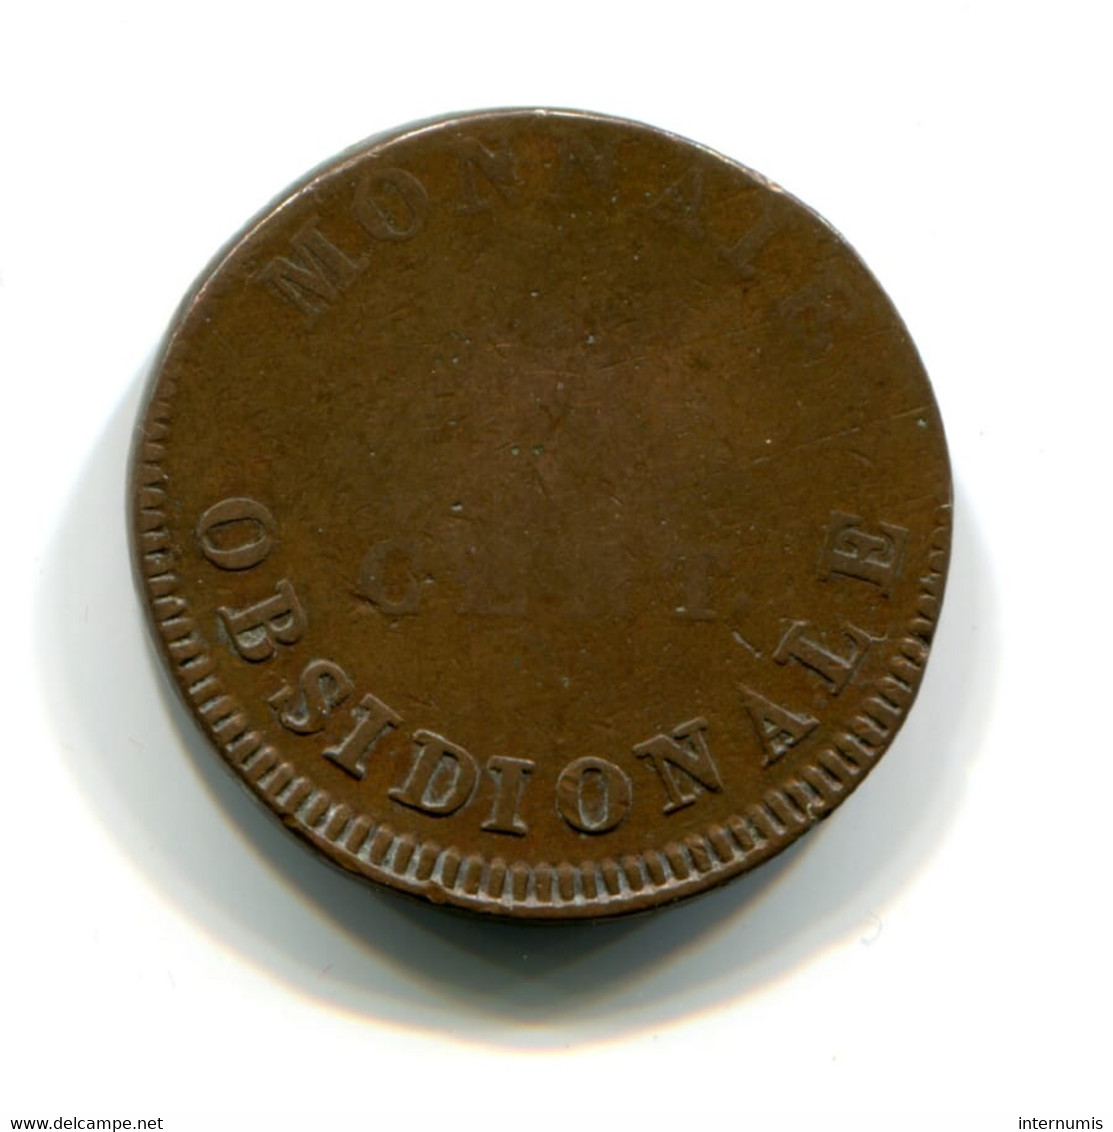 Belgique / Belgium, 5 Centimes, 1814-V, Siege D'Anvers - Napoléon, Bronze, WOLSCHOT, KM#2, F.115B/2, G.129b, COL.10a - 1814 Siege Of Antwerp